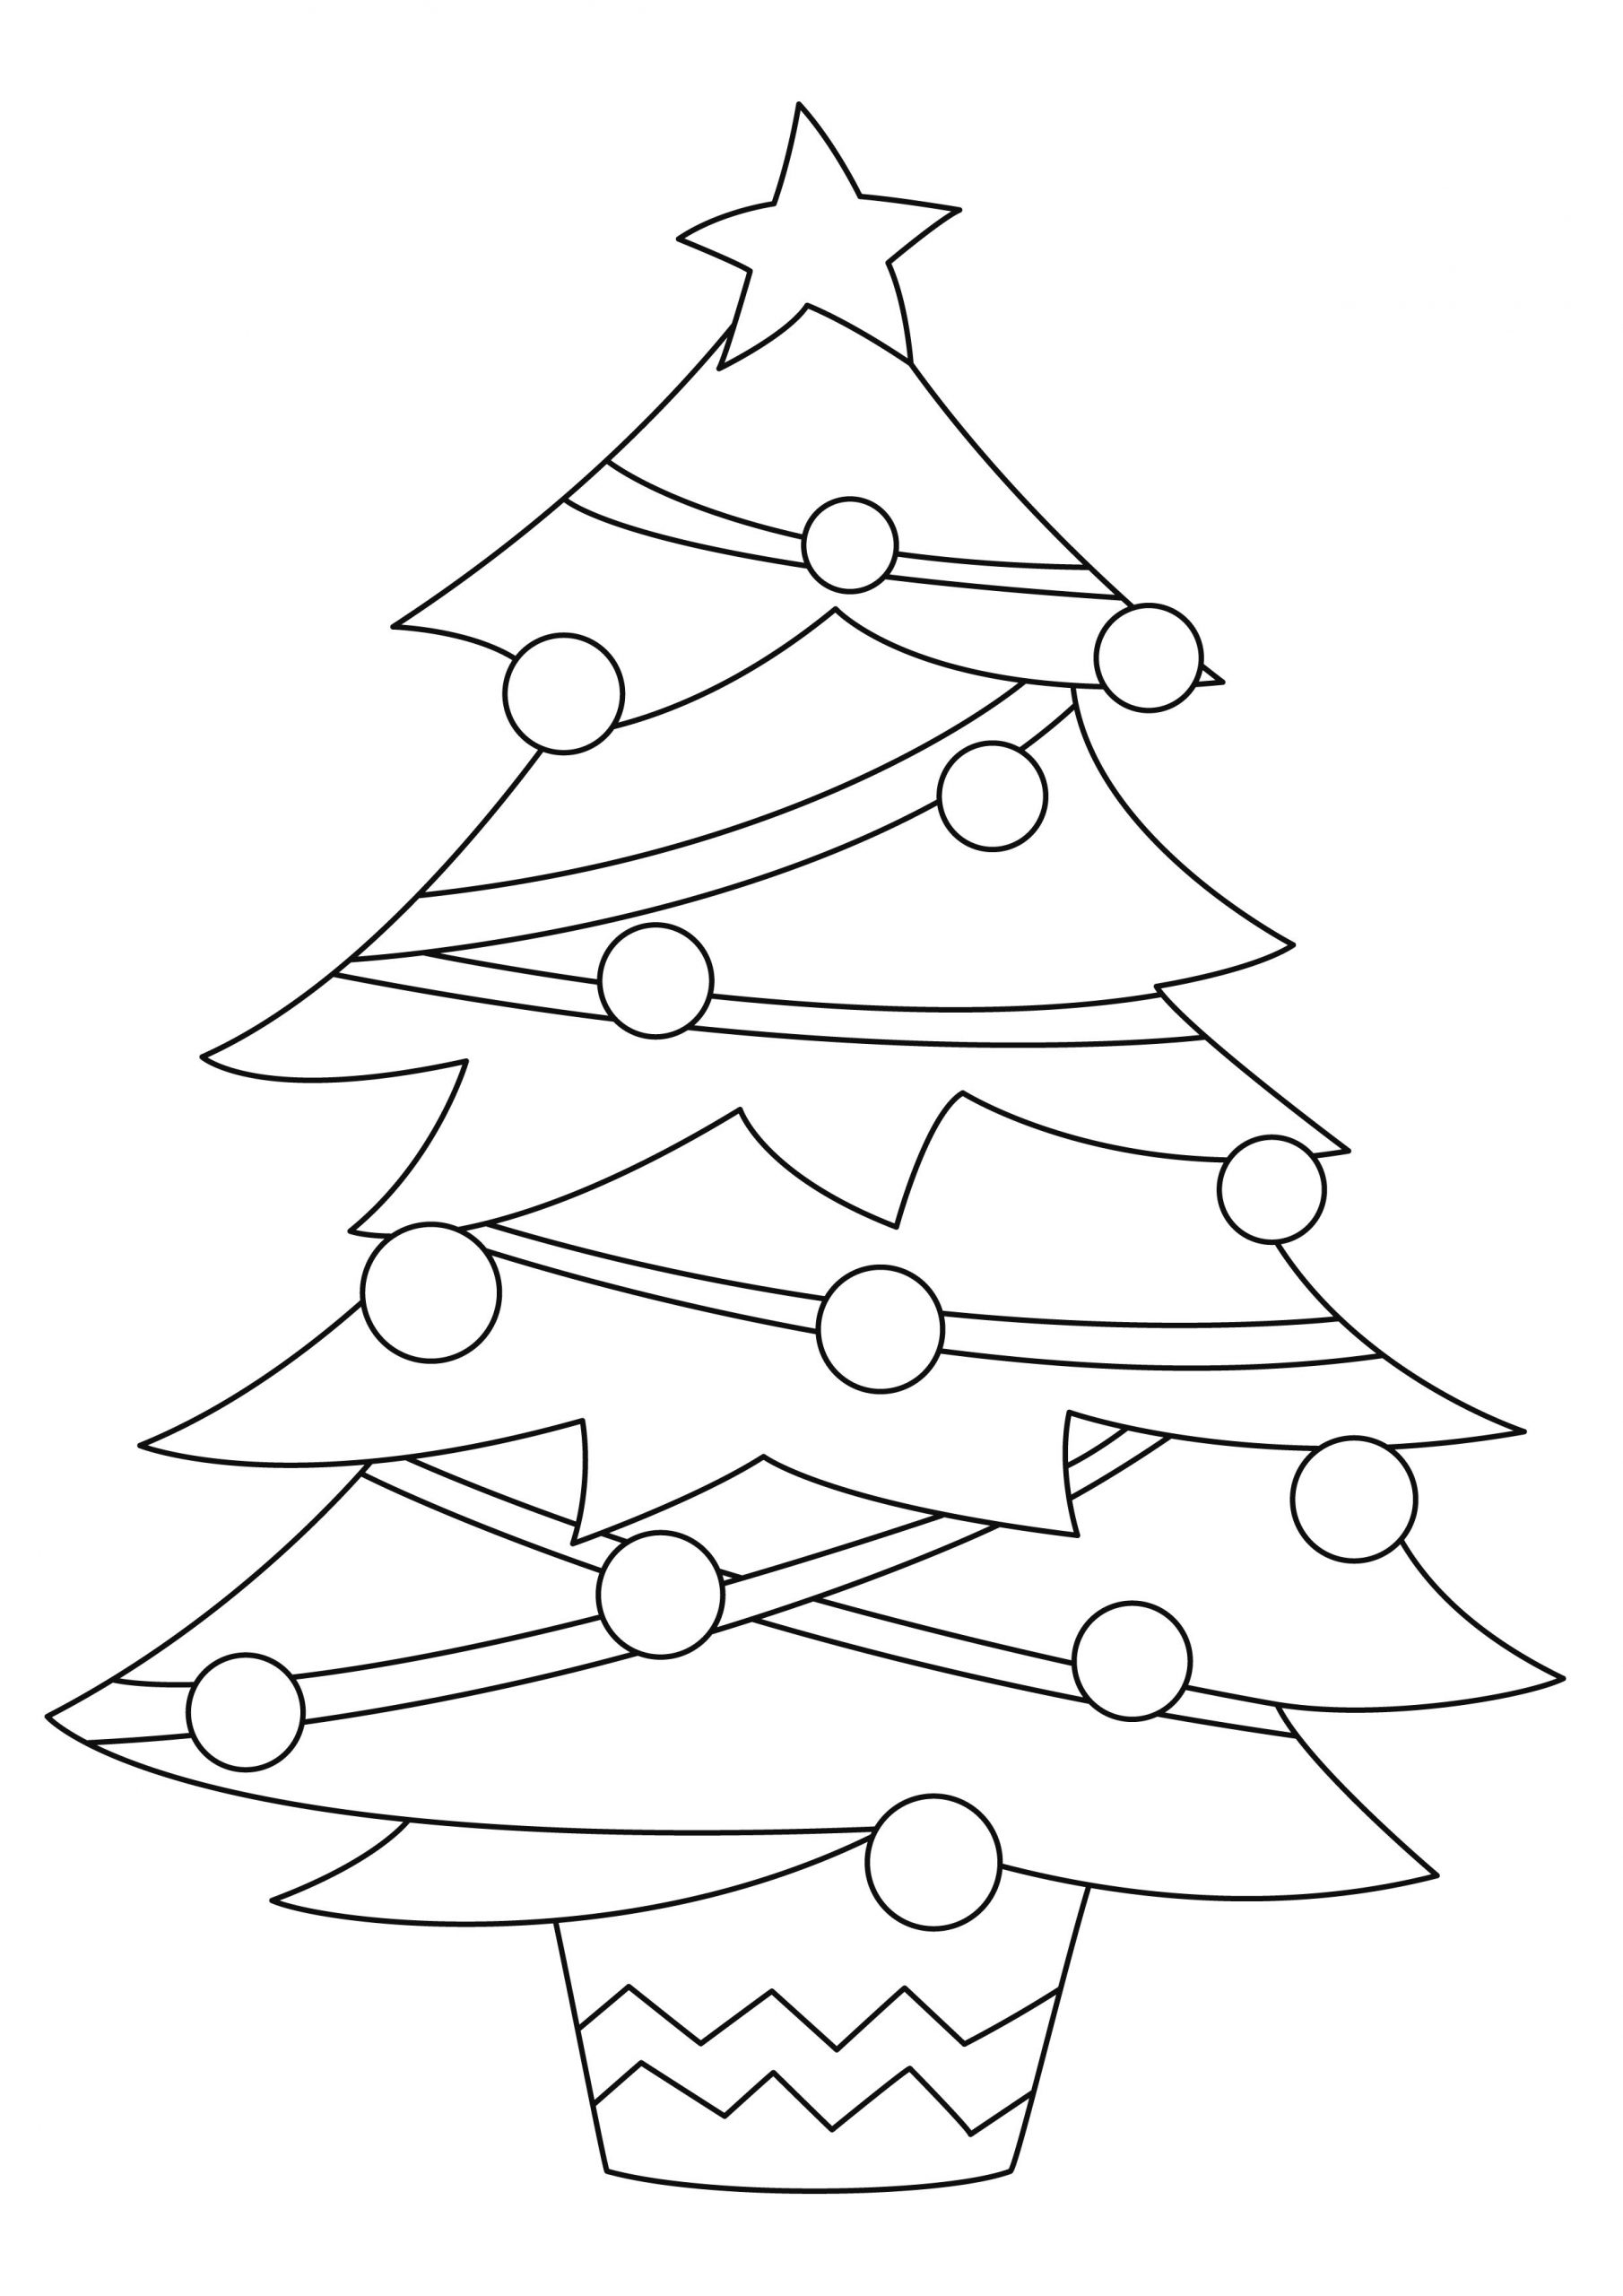 Coloriage - Noël : Sapin 14 - 10 Doigts concernant Coloriage De Sapin De Noel A Imprimer Gratuit